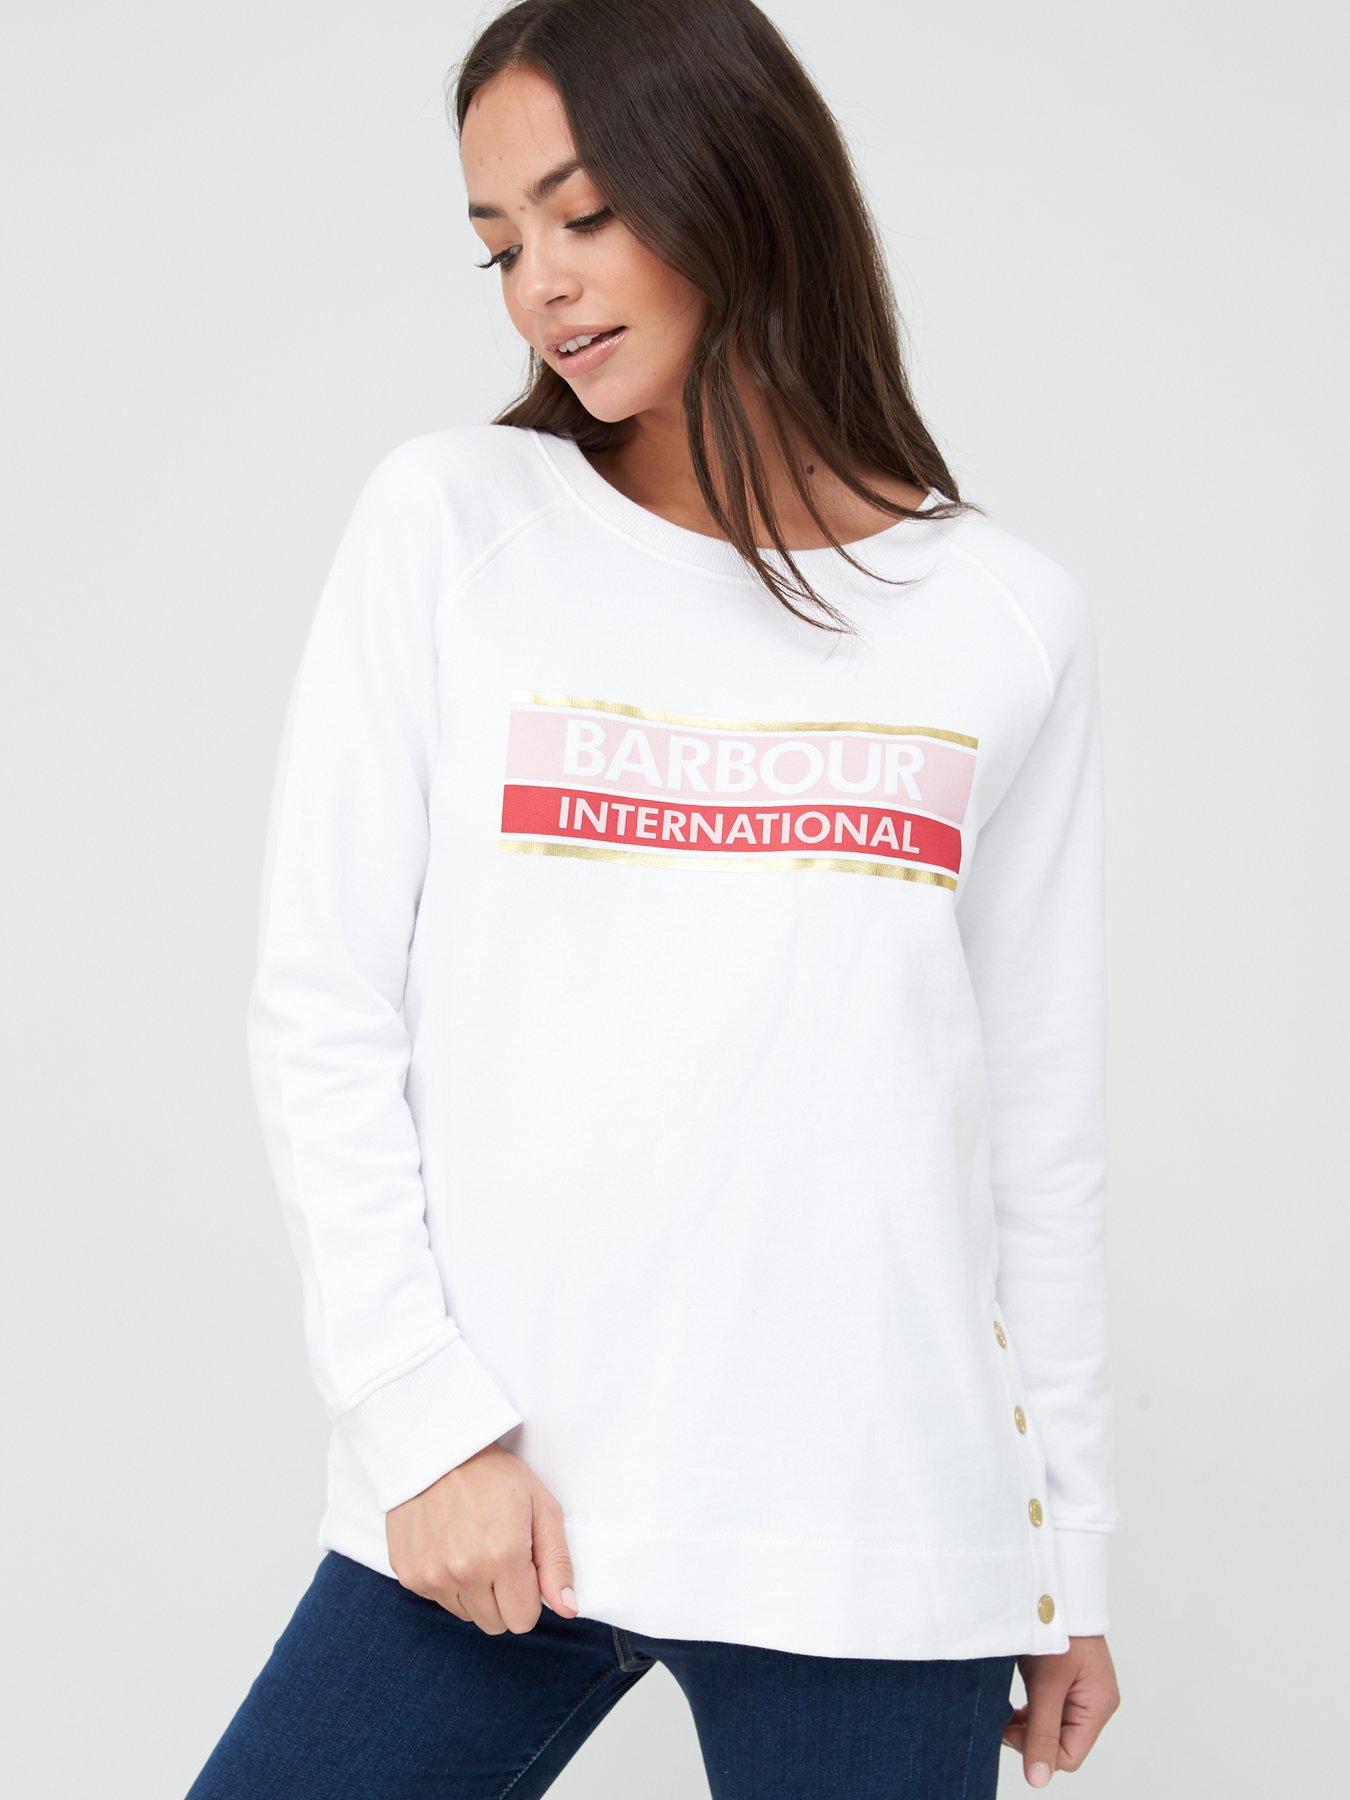 barbour international sweatshirt womens